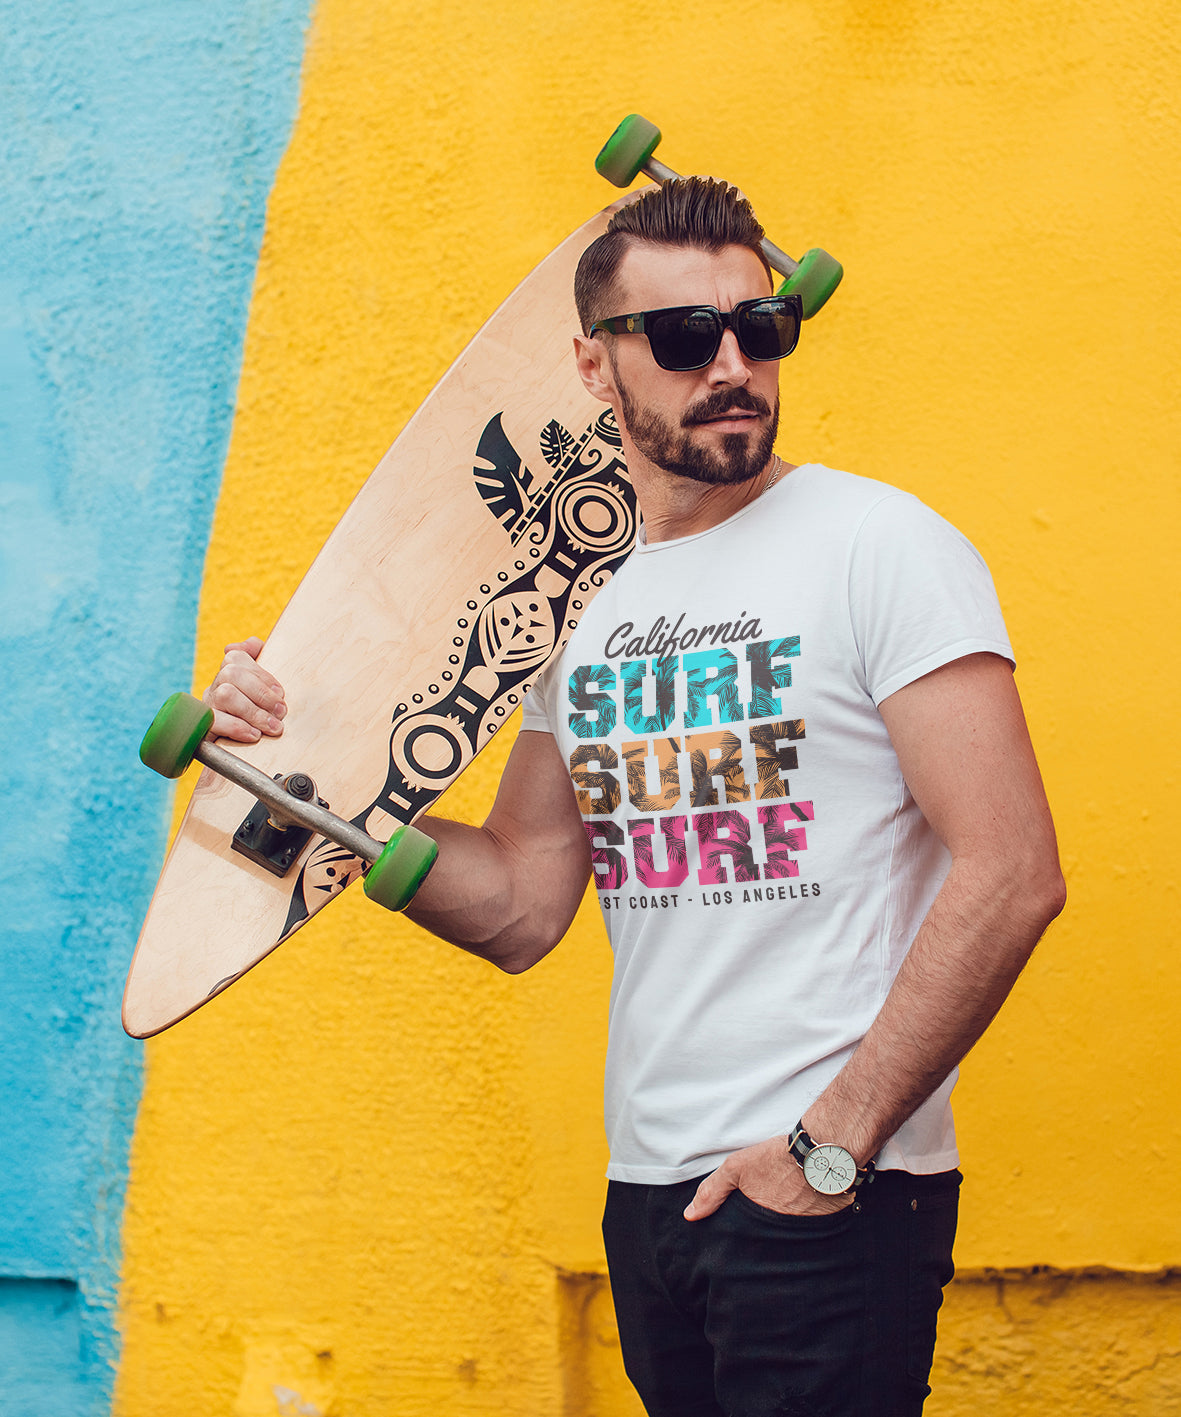 T-shirt "SURF, SURF, SURF"